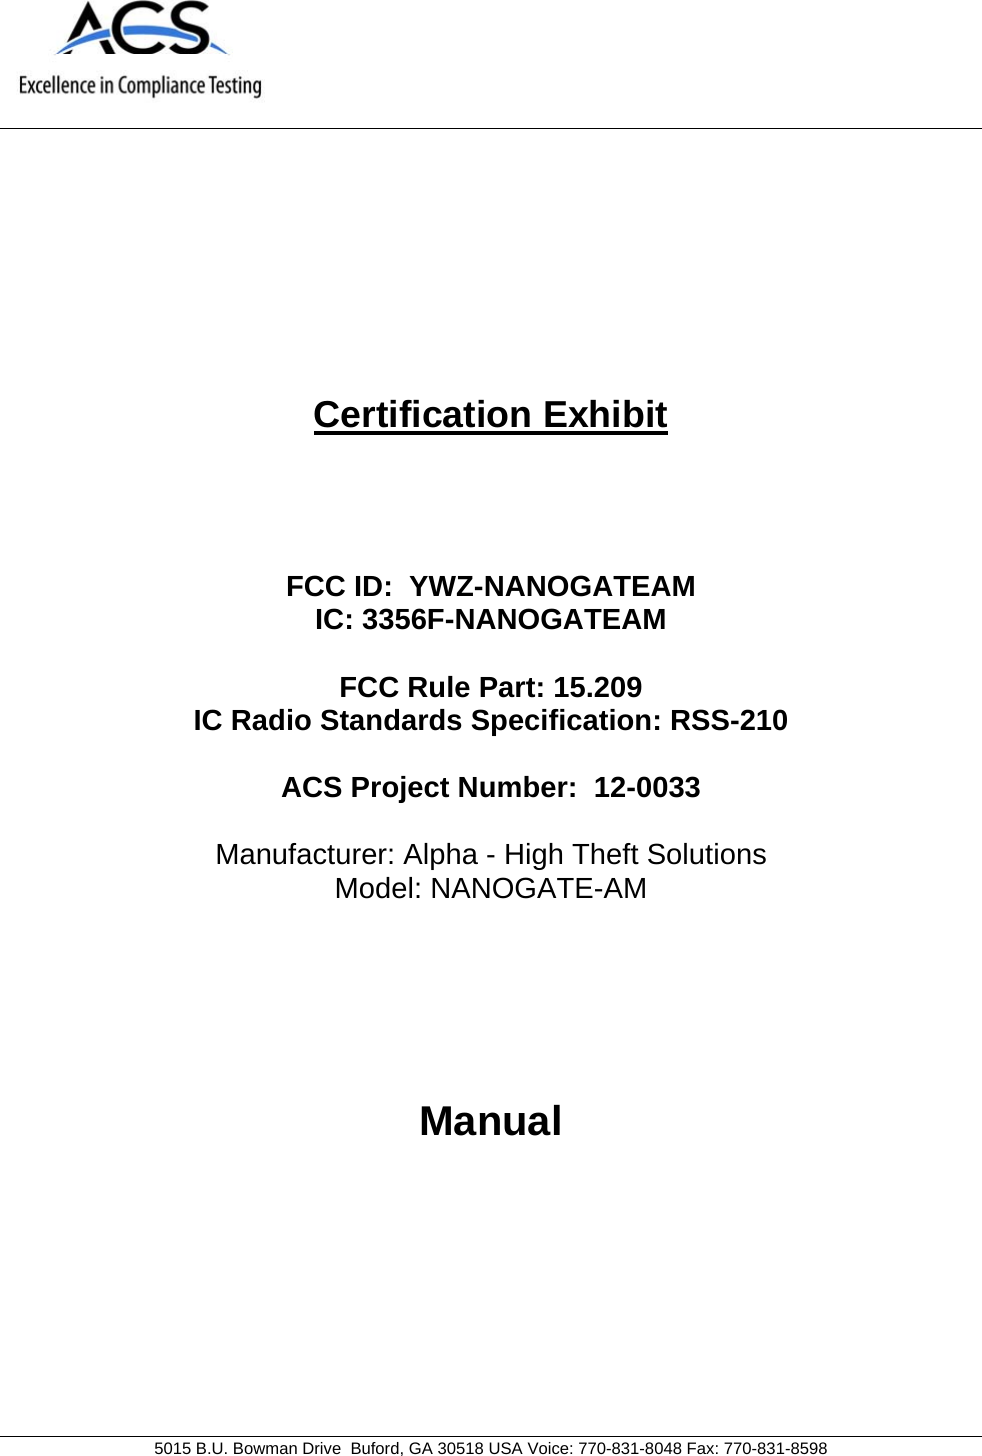     5015 B.U. Bowman Drive  Buford, GA 30518 USA Voice: 770-831-8048 Fax: 770-831-8598   Certification Exhibit     FCC ID:  YWZ-NANOGATEAM IC: 3356F-NANOGATEAM  FCC Rule Part: 15.209 IC Radio Standards Specification: RSS-210  ACS Project Number:  12-0033   Manufacturer: Alpha - High Theft Solutions Model: NANOGATE-AM     Manual  